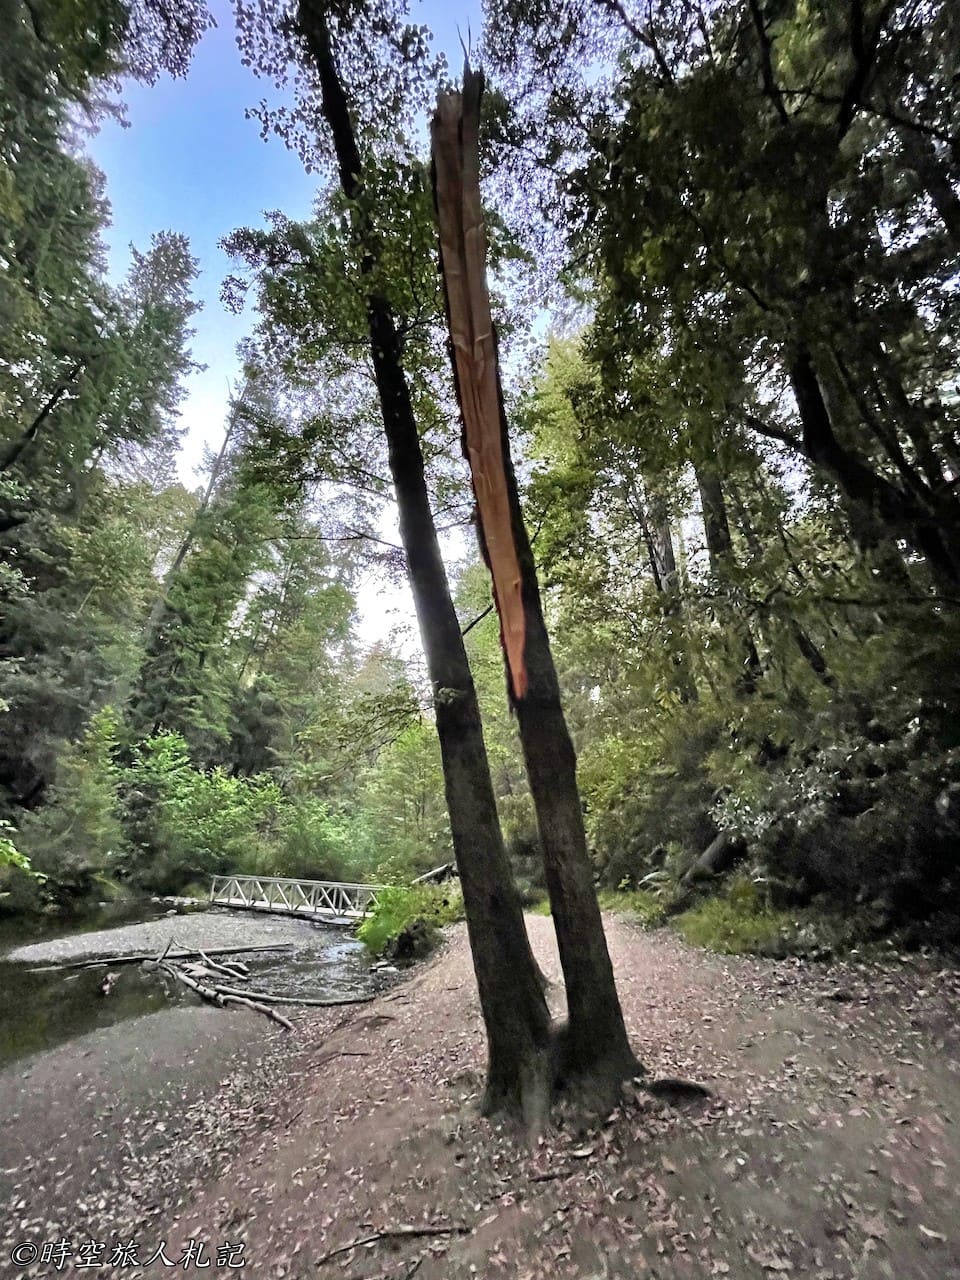 Portola redwood state park 23